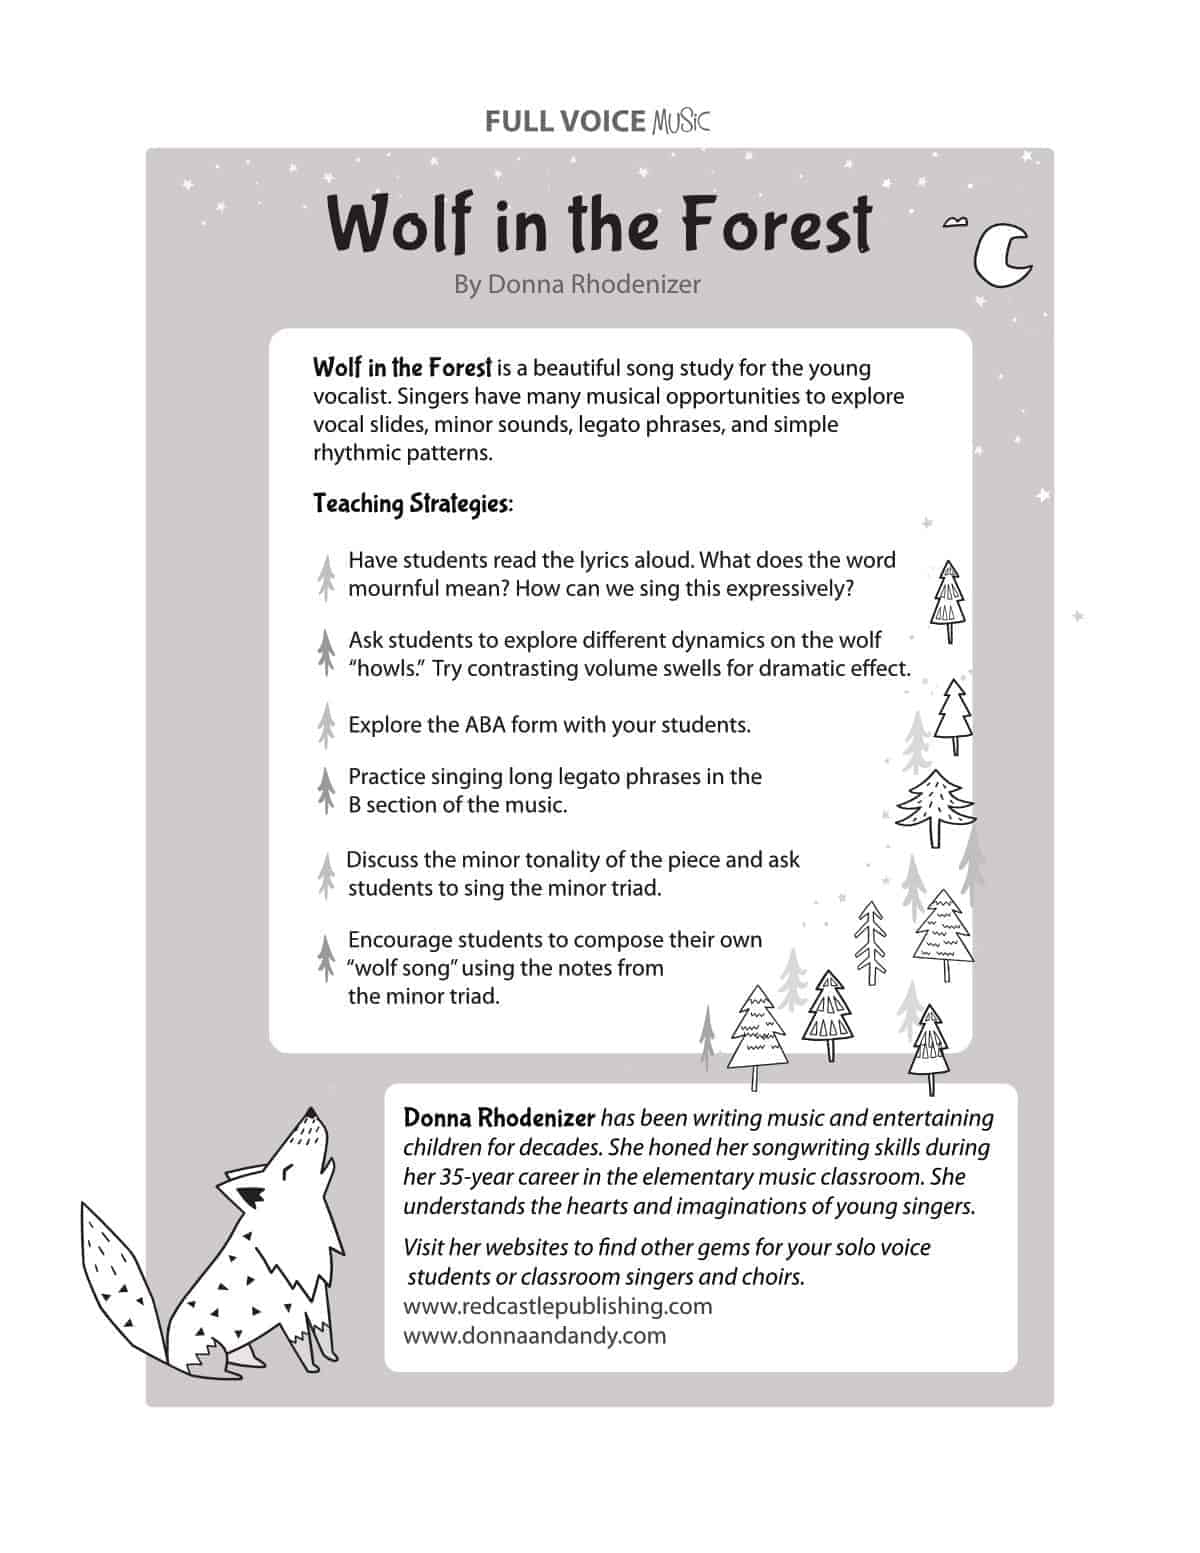 Wolf in the Forest by Donna Rhodenizer